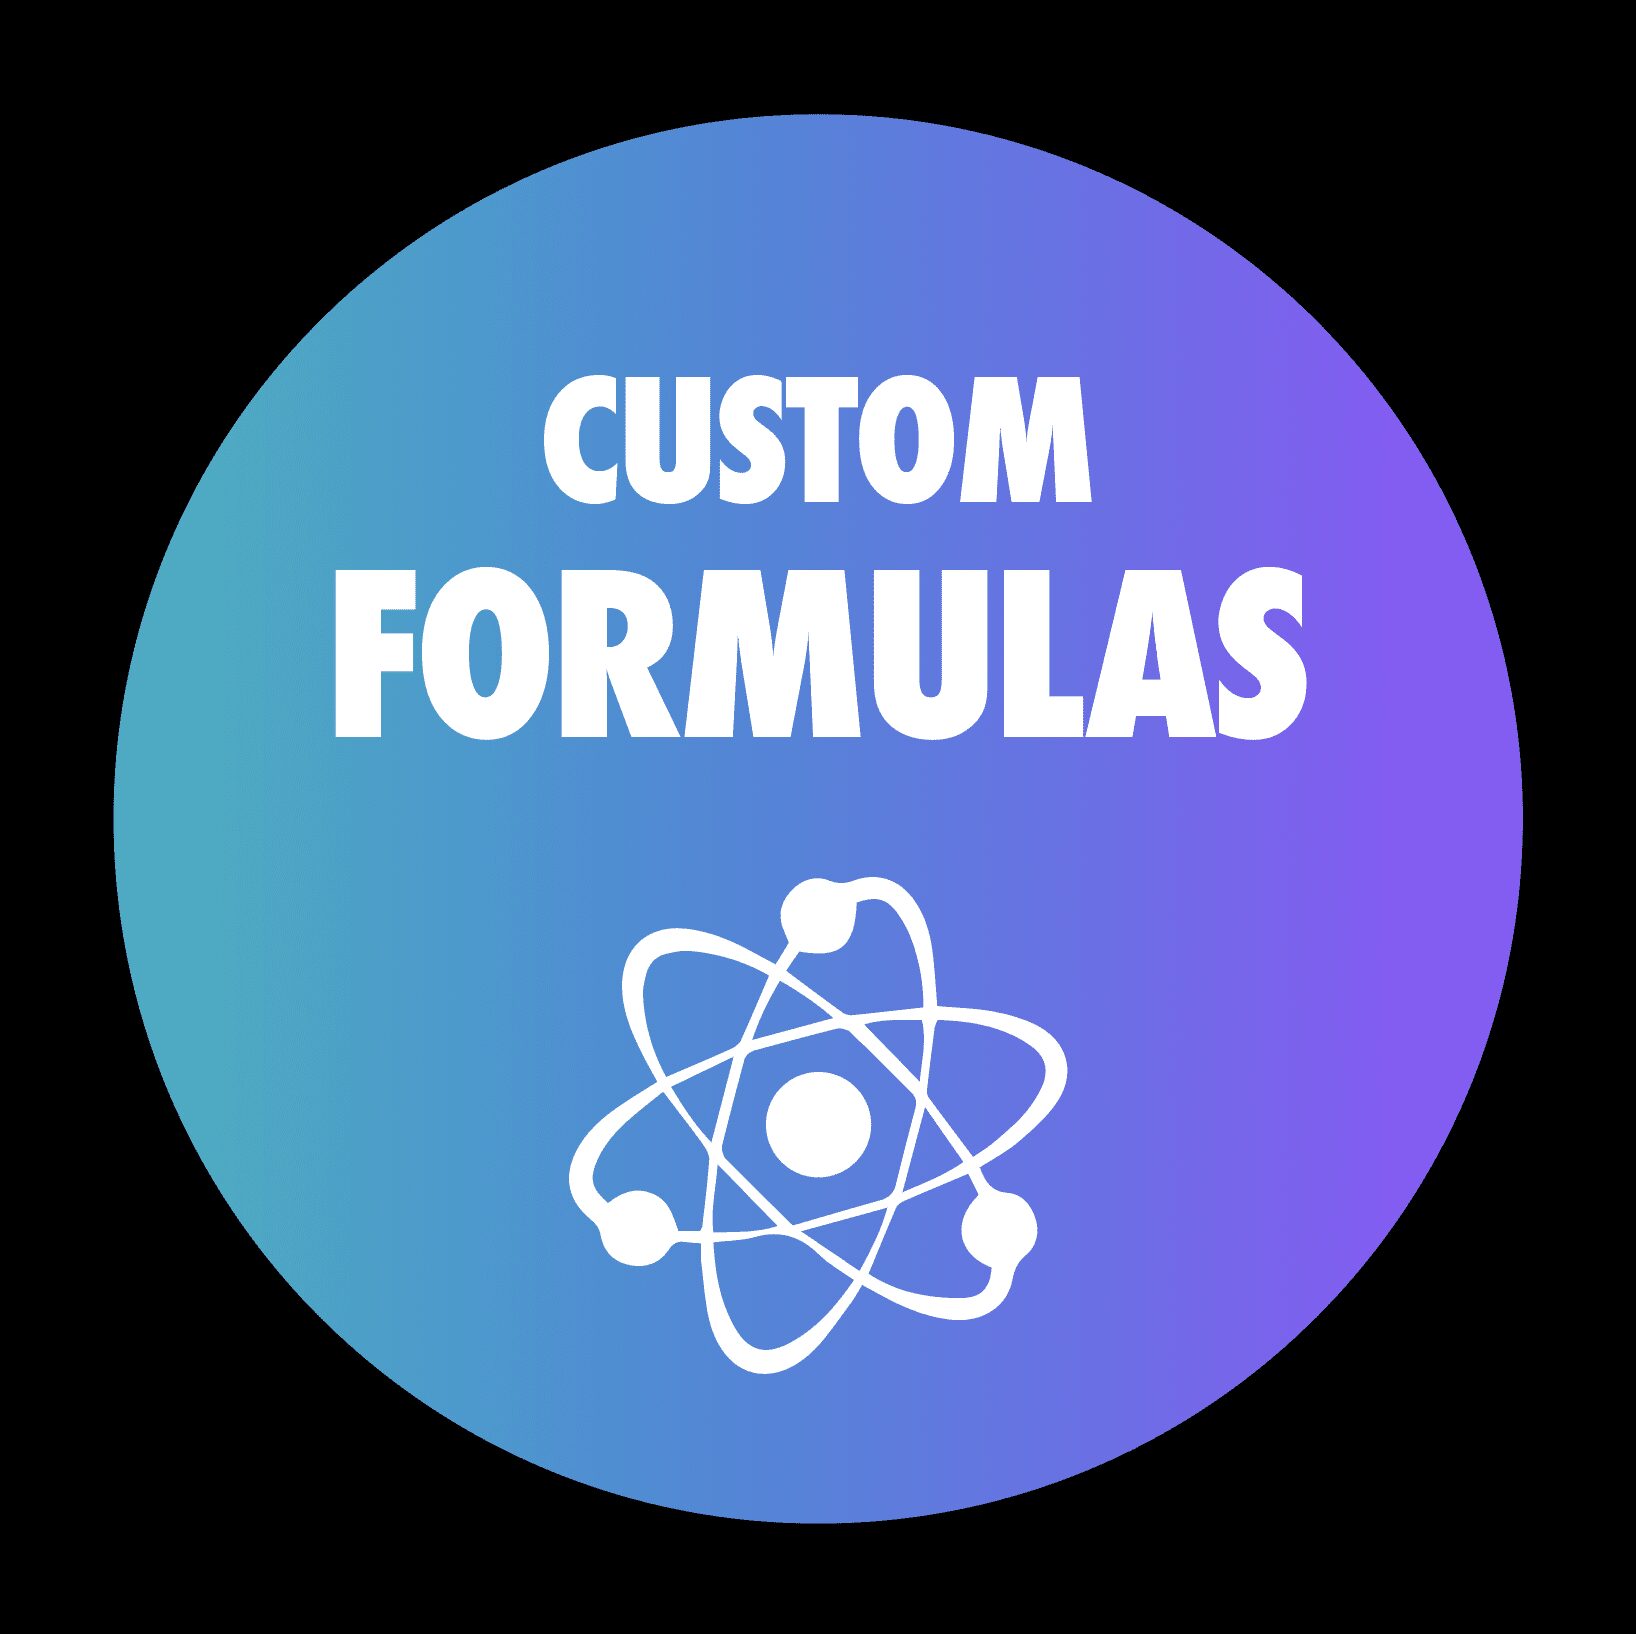 Custom formulas